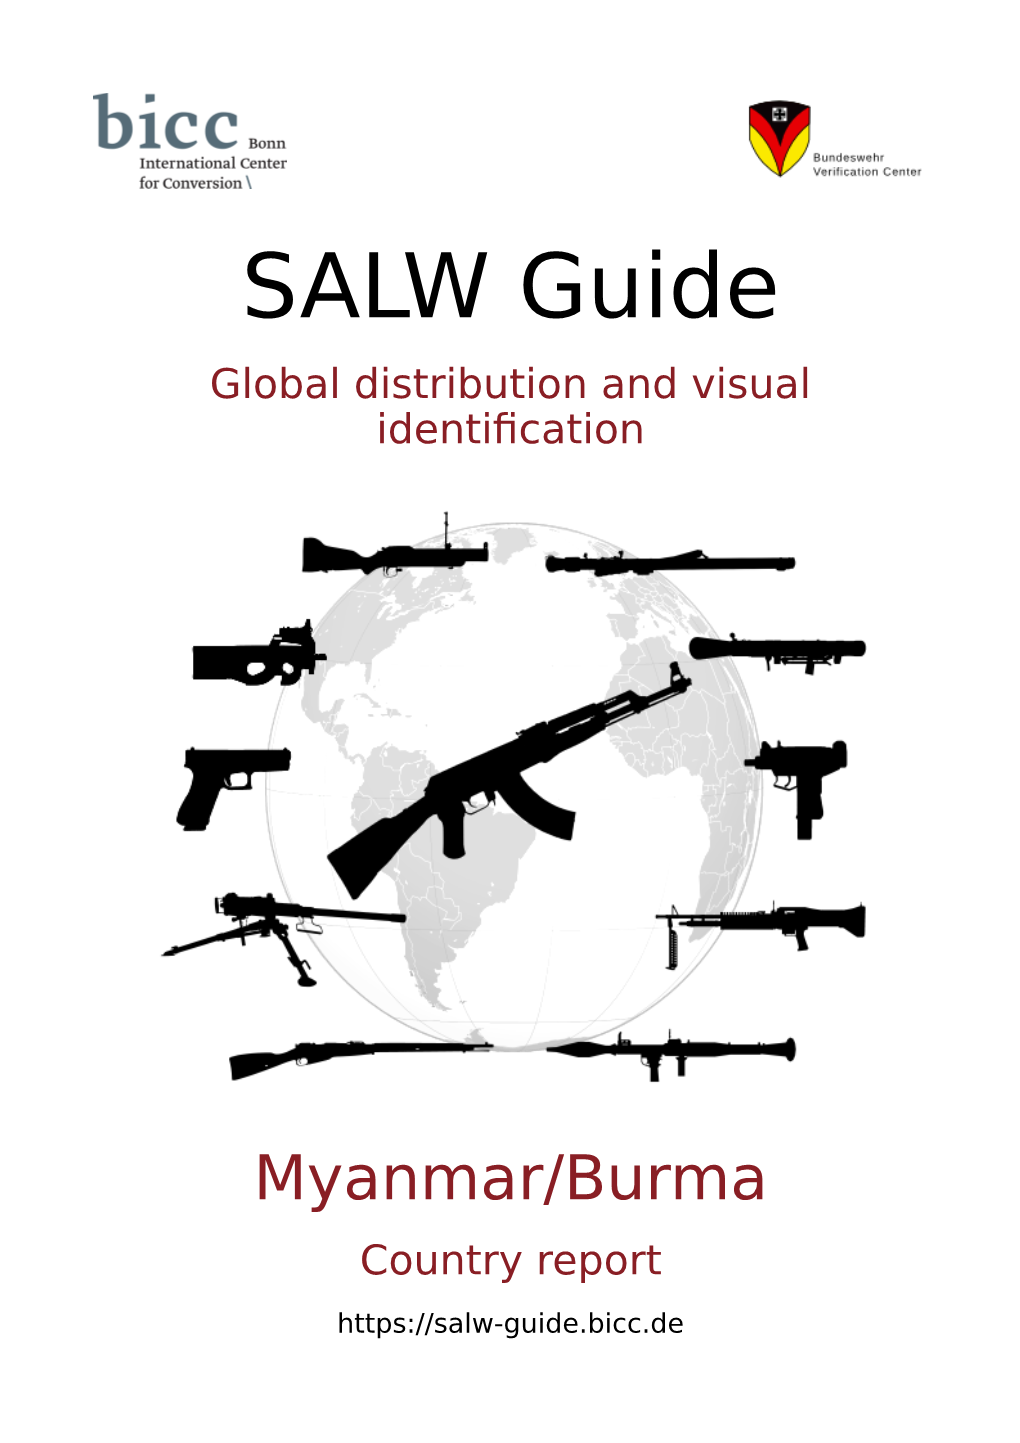 Myanmar/Burma Country Report